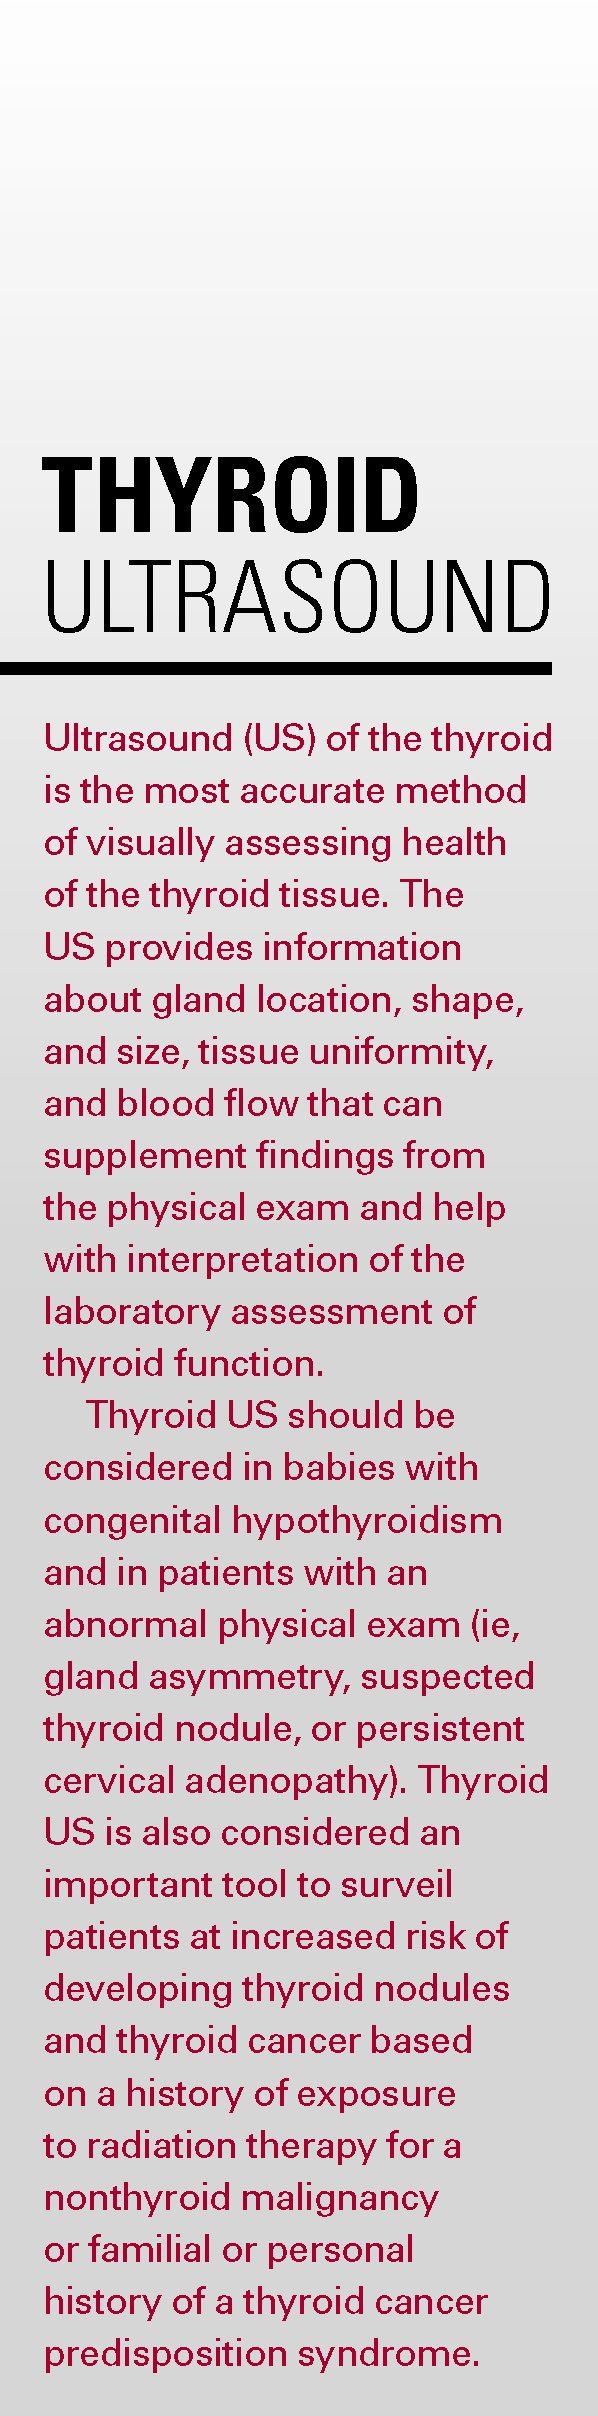 ultrasound in thyroid assessment